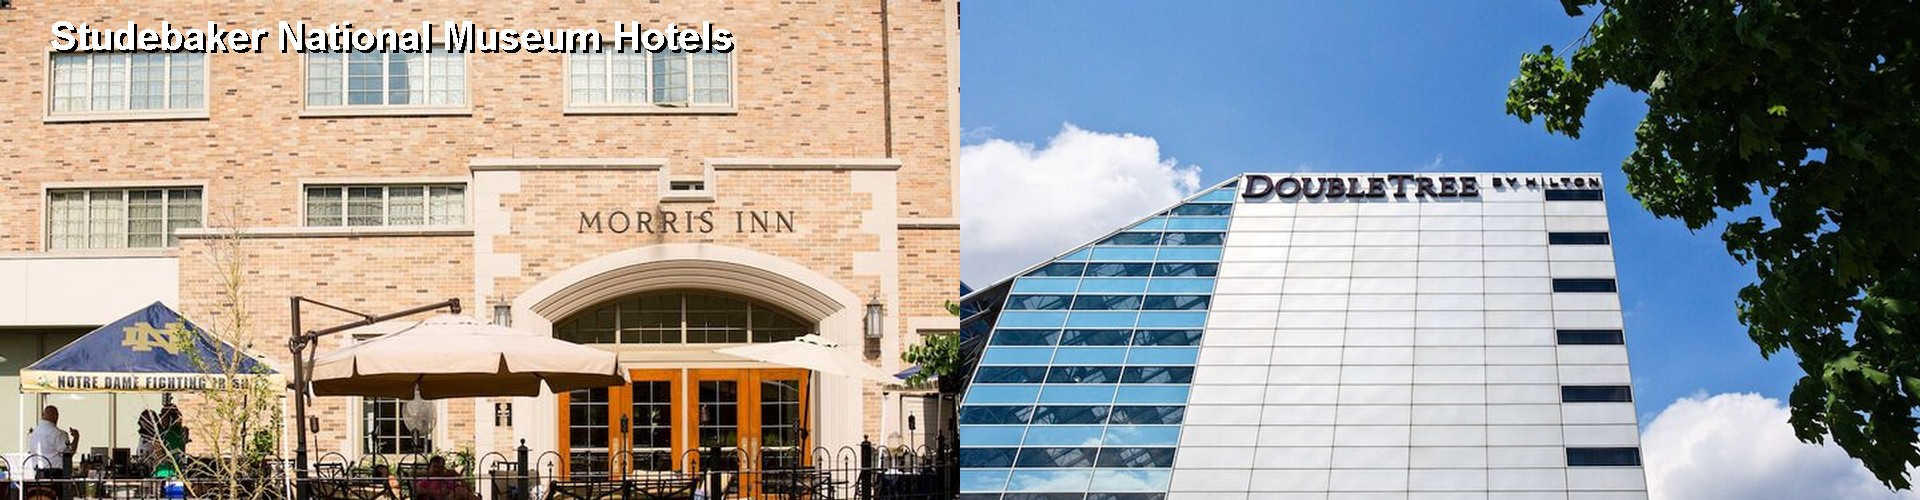 5 Best Hotels near Studebaker National Museum